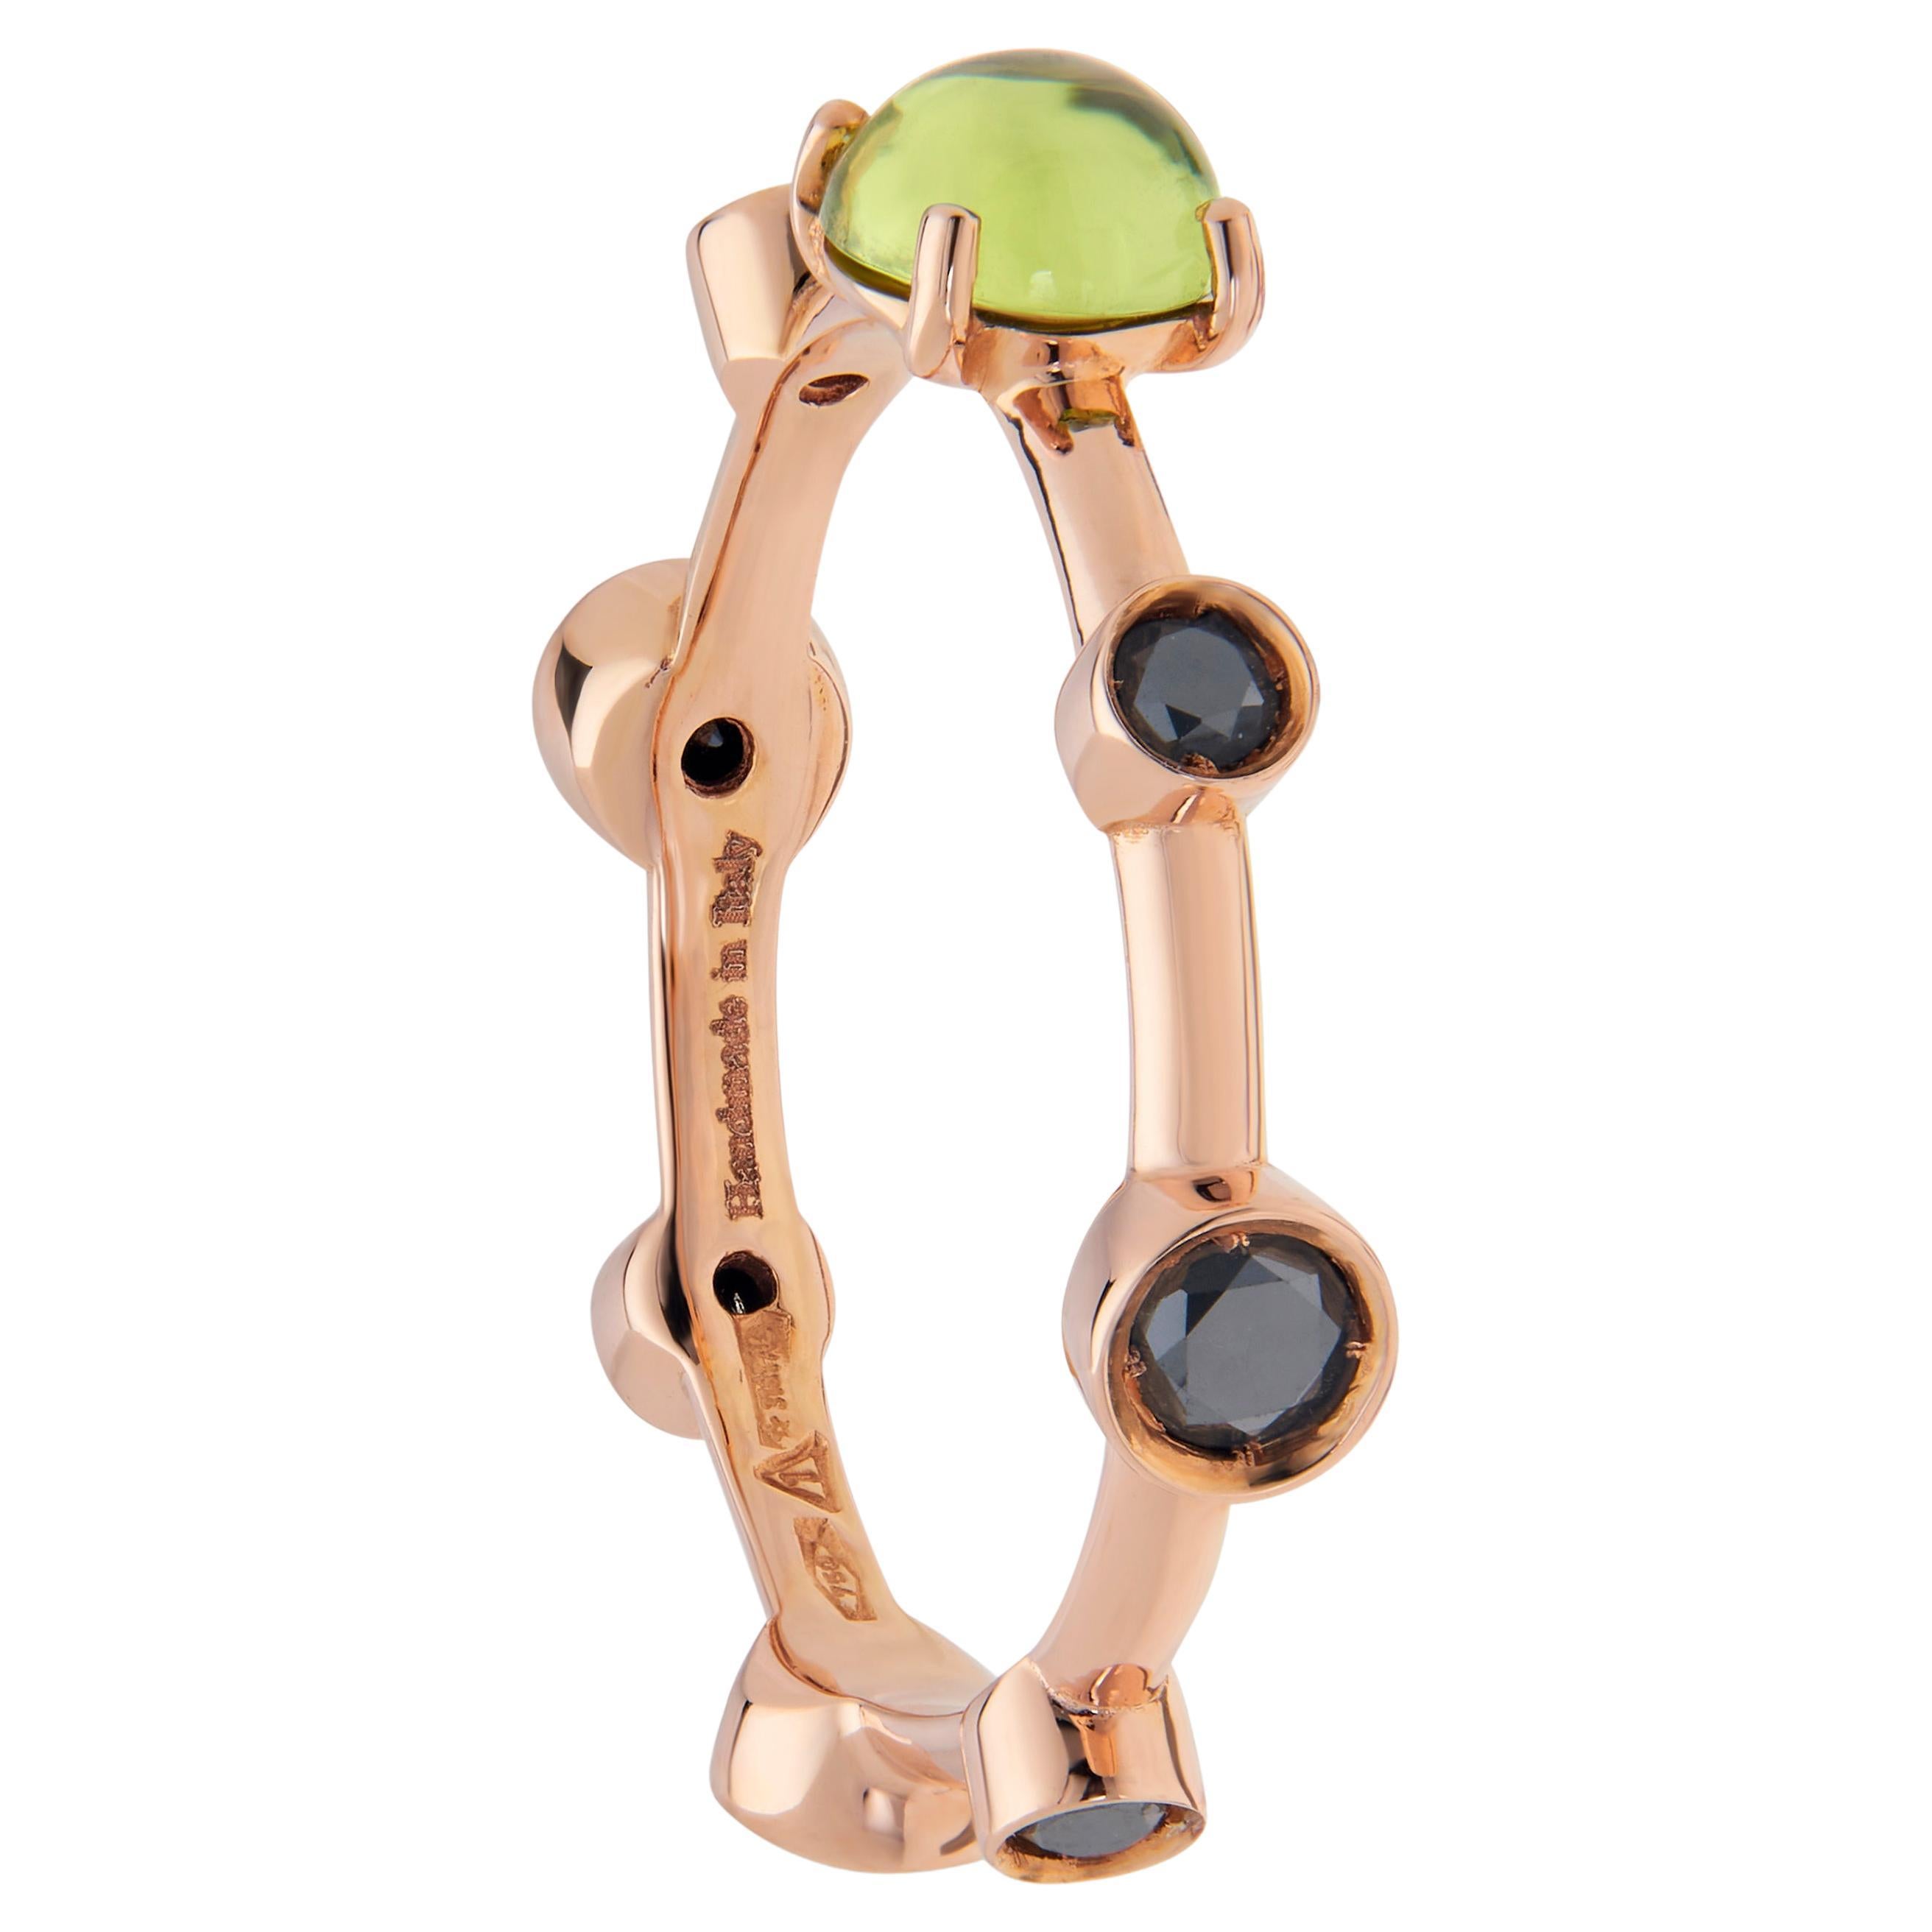 Damiani 18K Rose Gold, Black & Green Peridot Gemstone Ring Sz. 7 For Sale